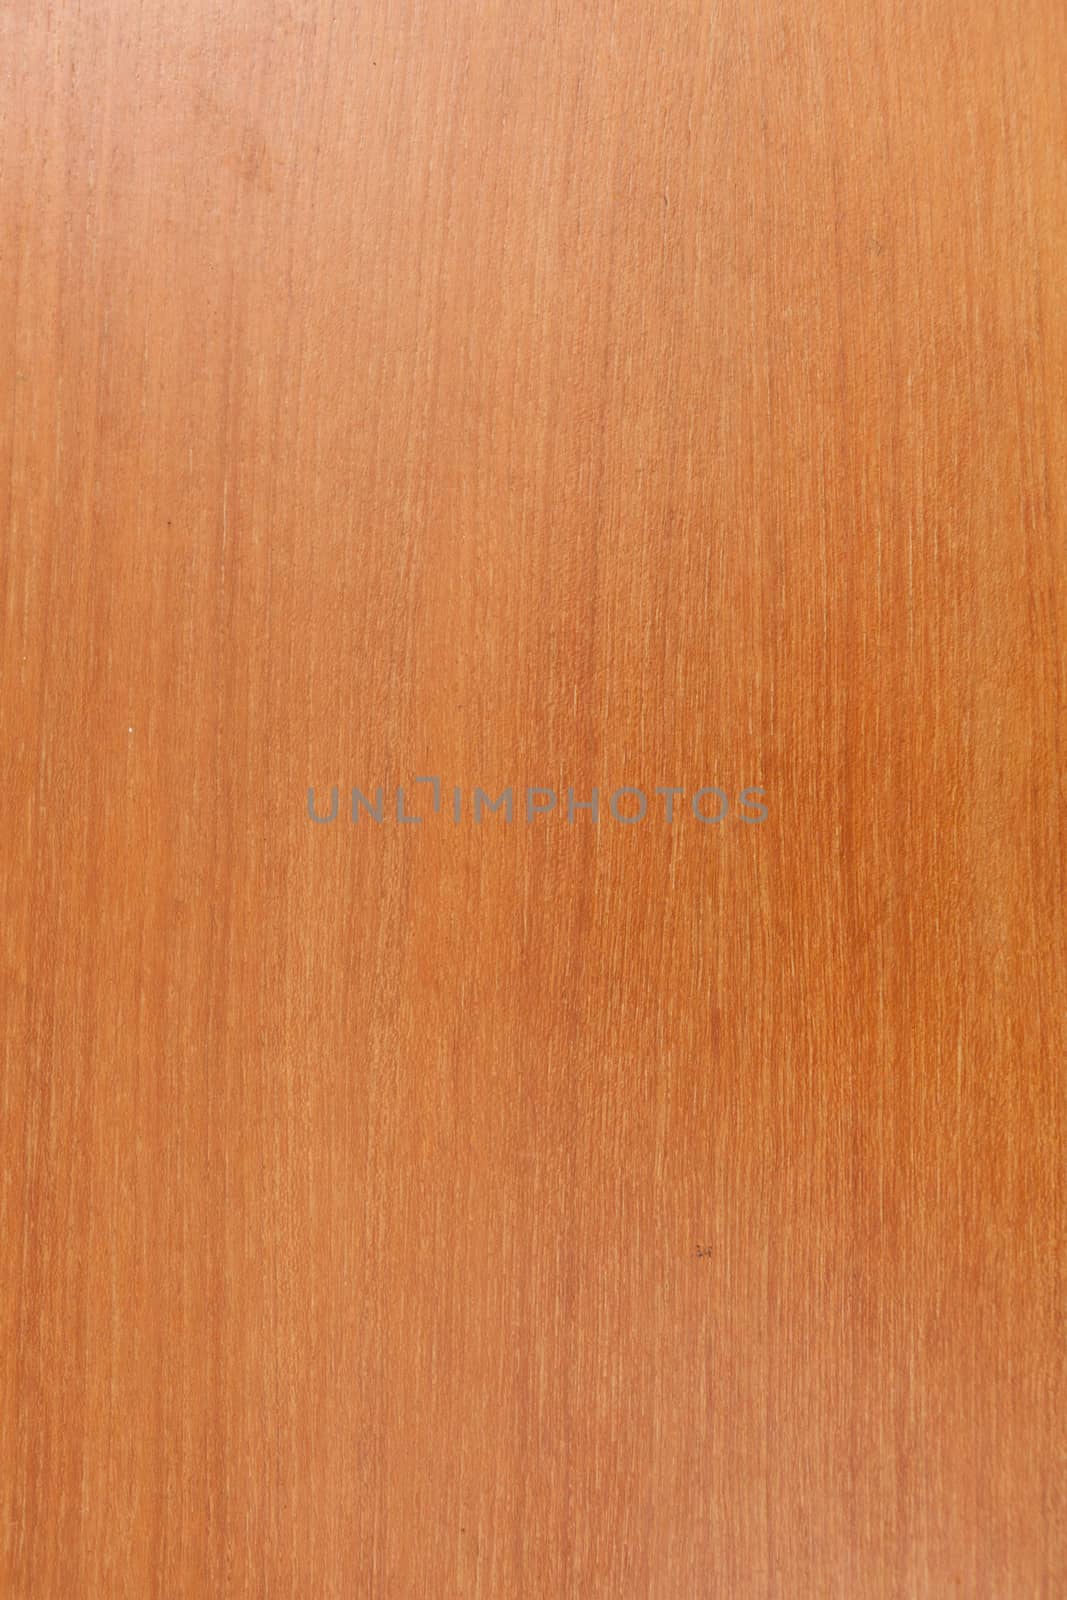 High resolution vintage natural wood grain texture .